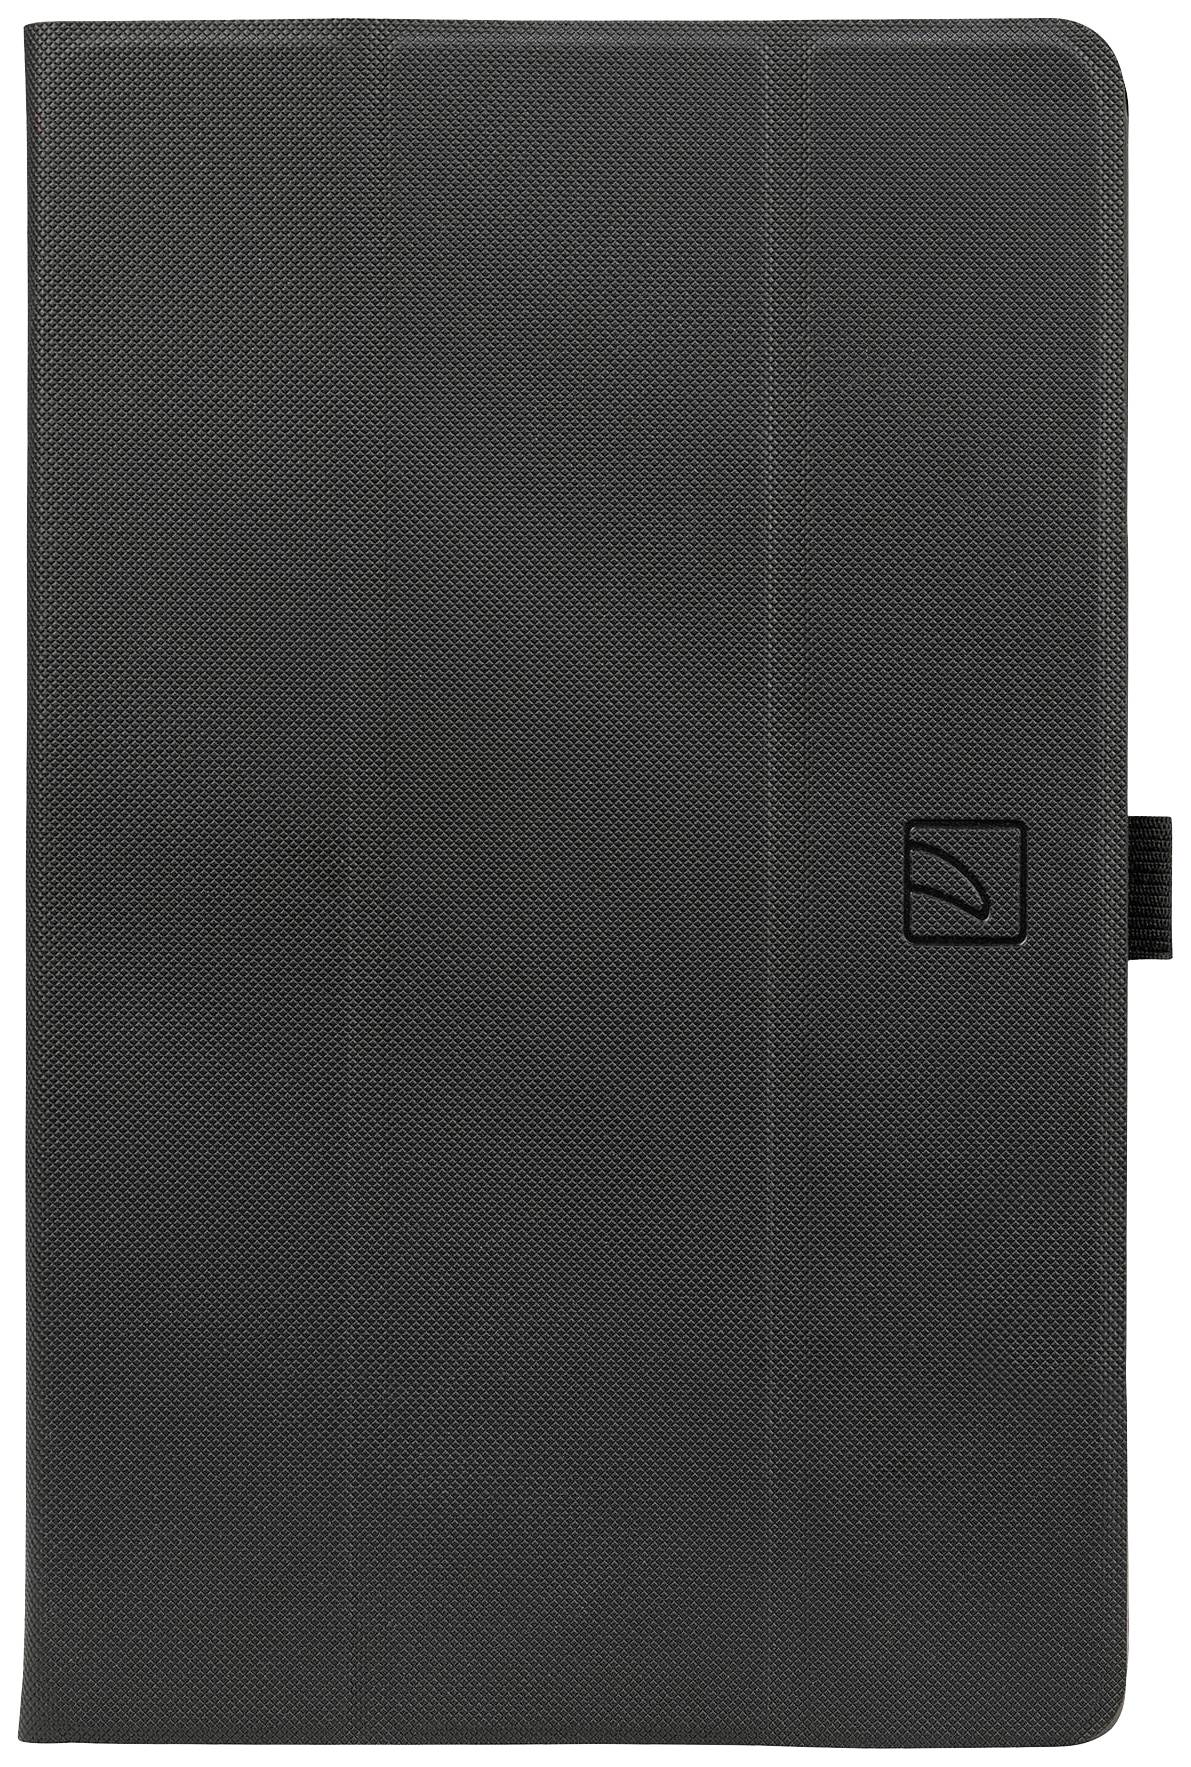 TUCANO TRE Folio BookCase Lenovo Tab M10 Plus (3. Generation) Grau Tablet Tasche, modellspezifi